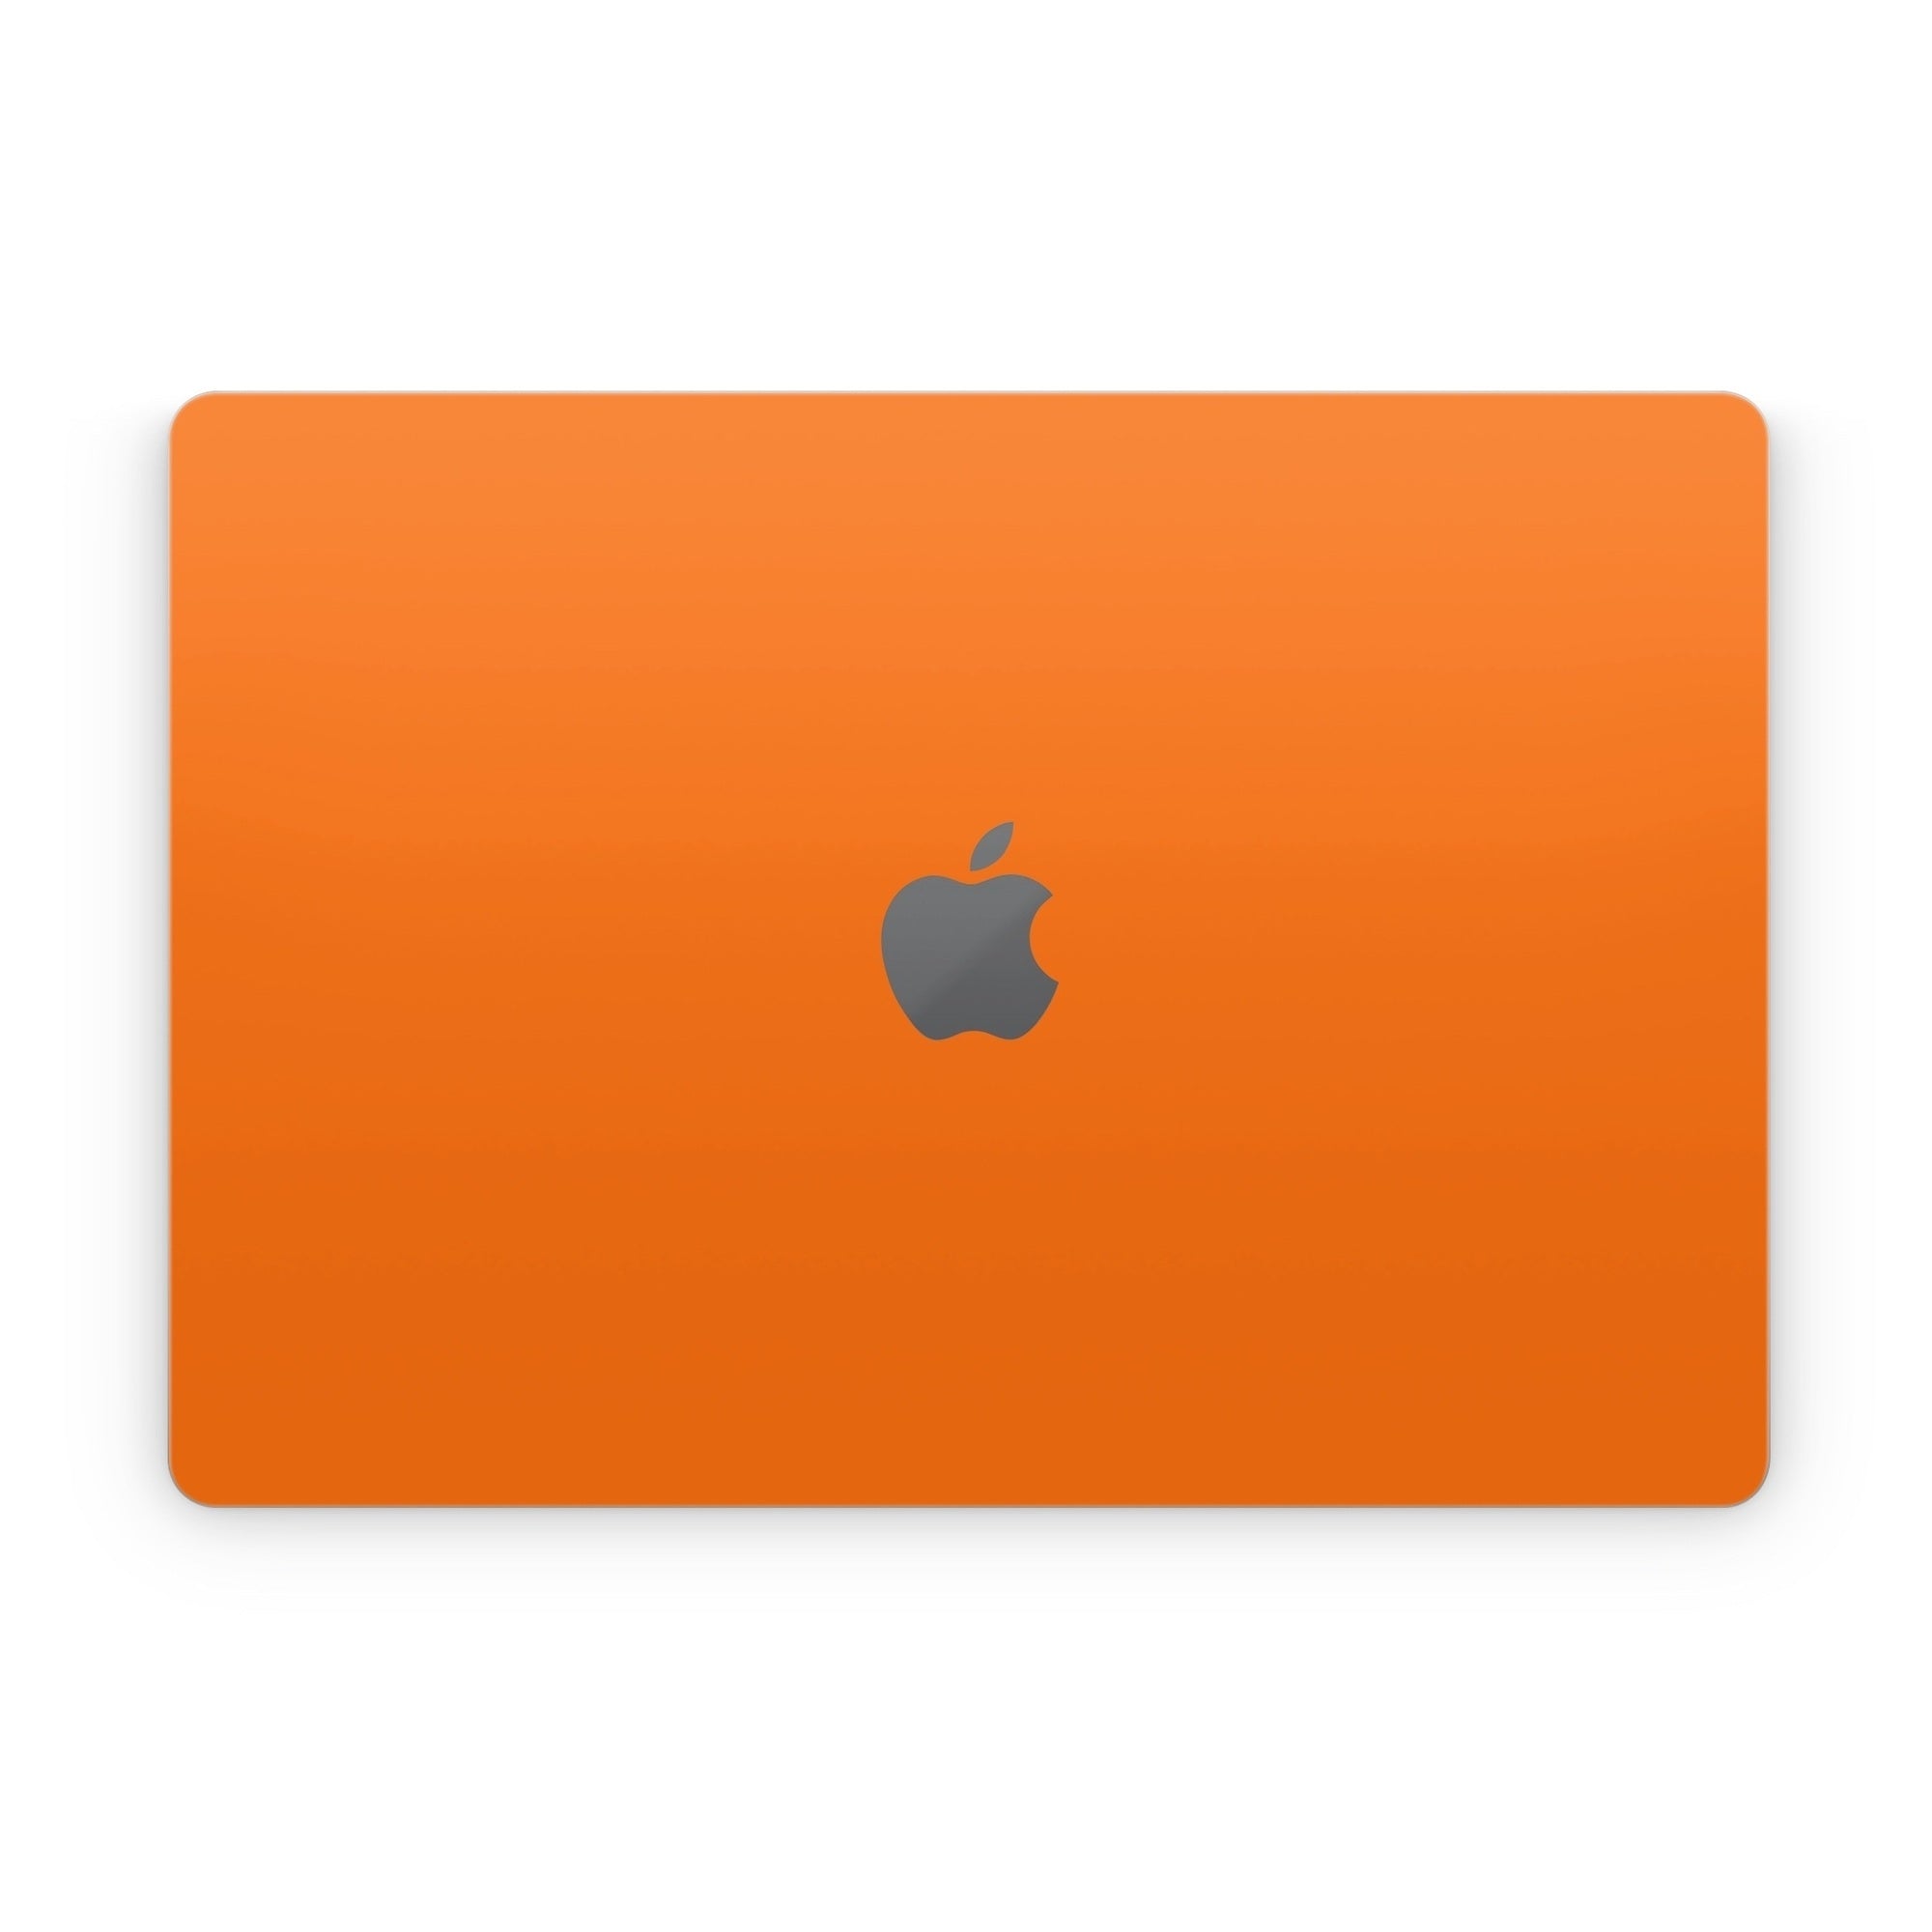 Solid State Pumpkin - Apple MacBook Skin